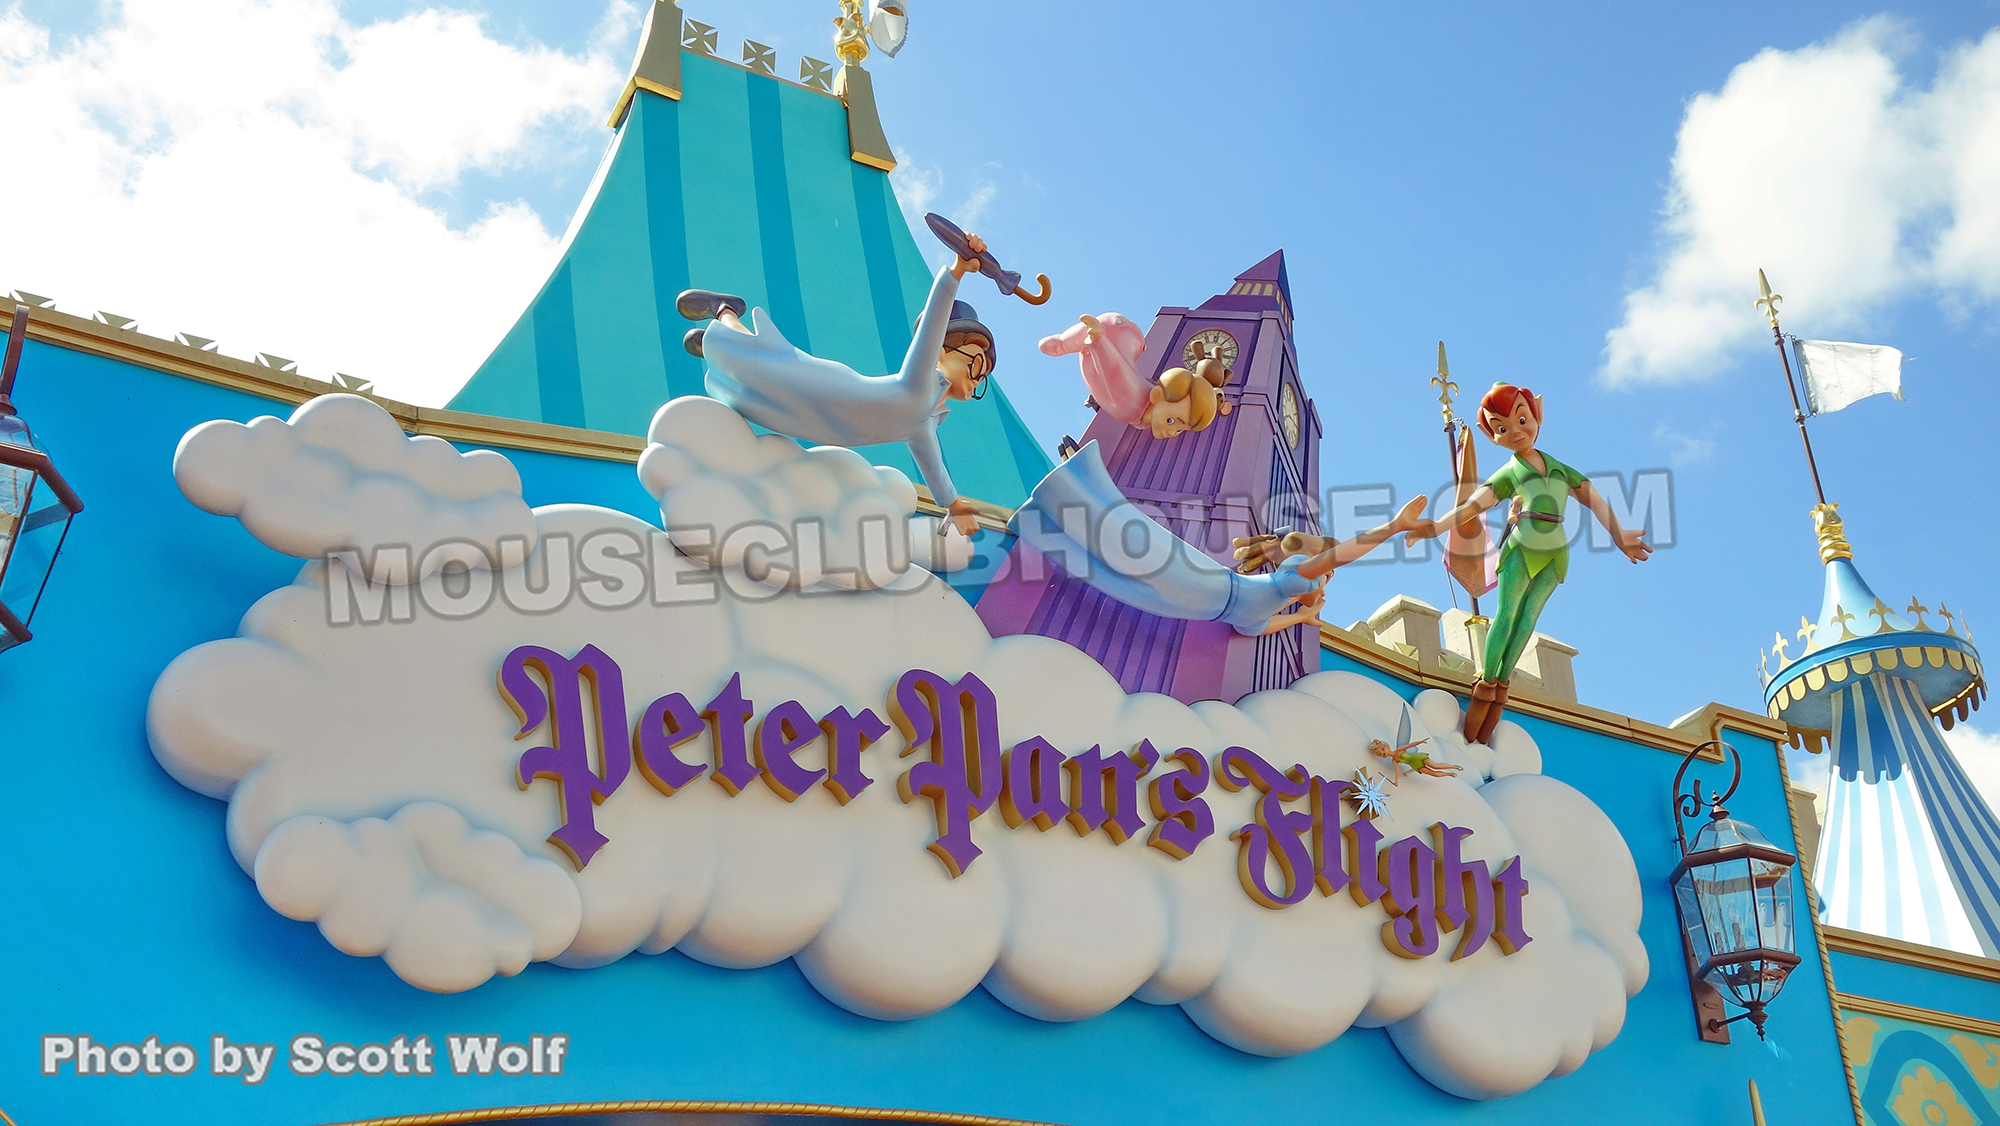 Peter Pan's Flight in the Magic Kingdom in Walt Disney World